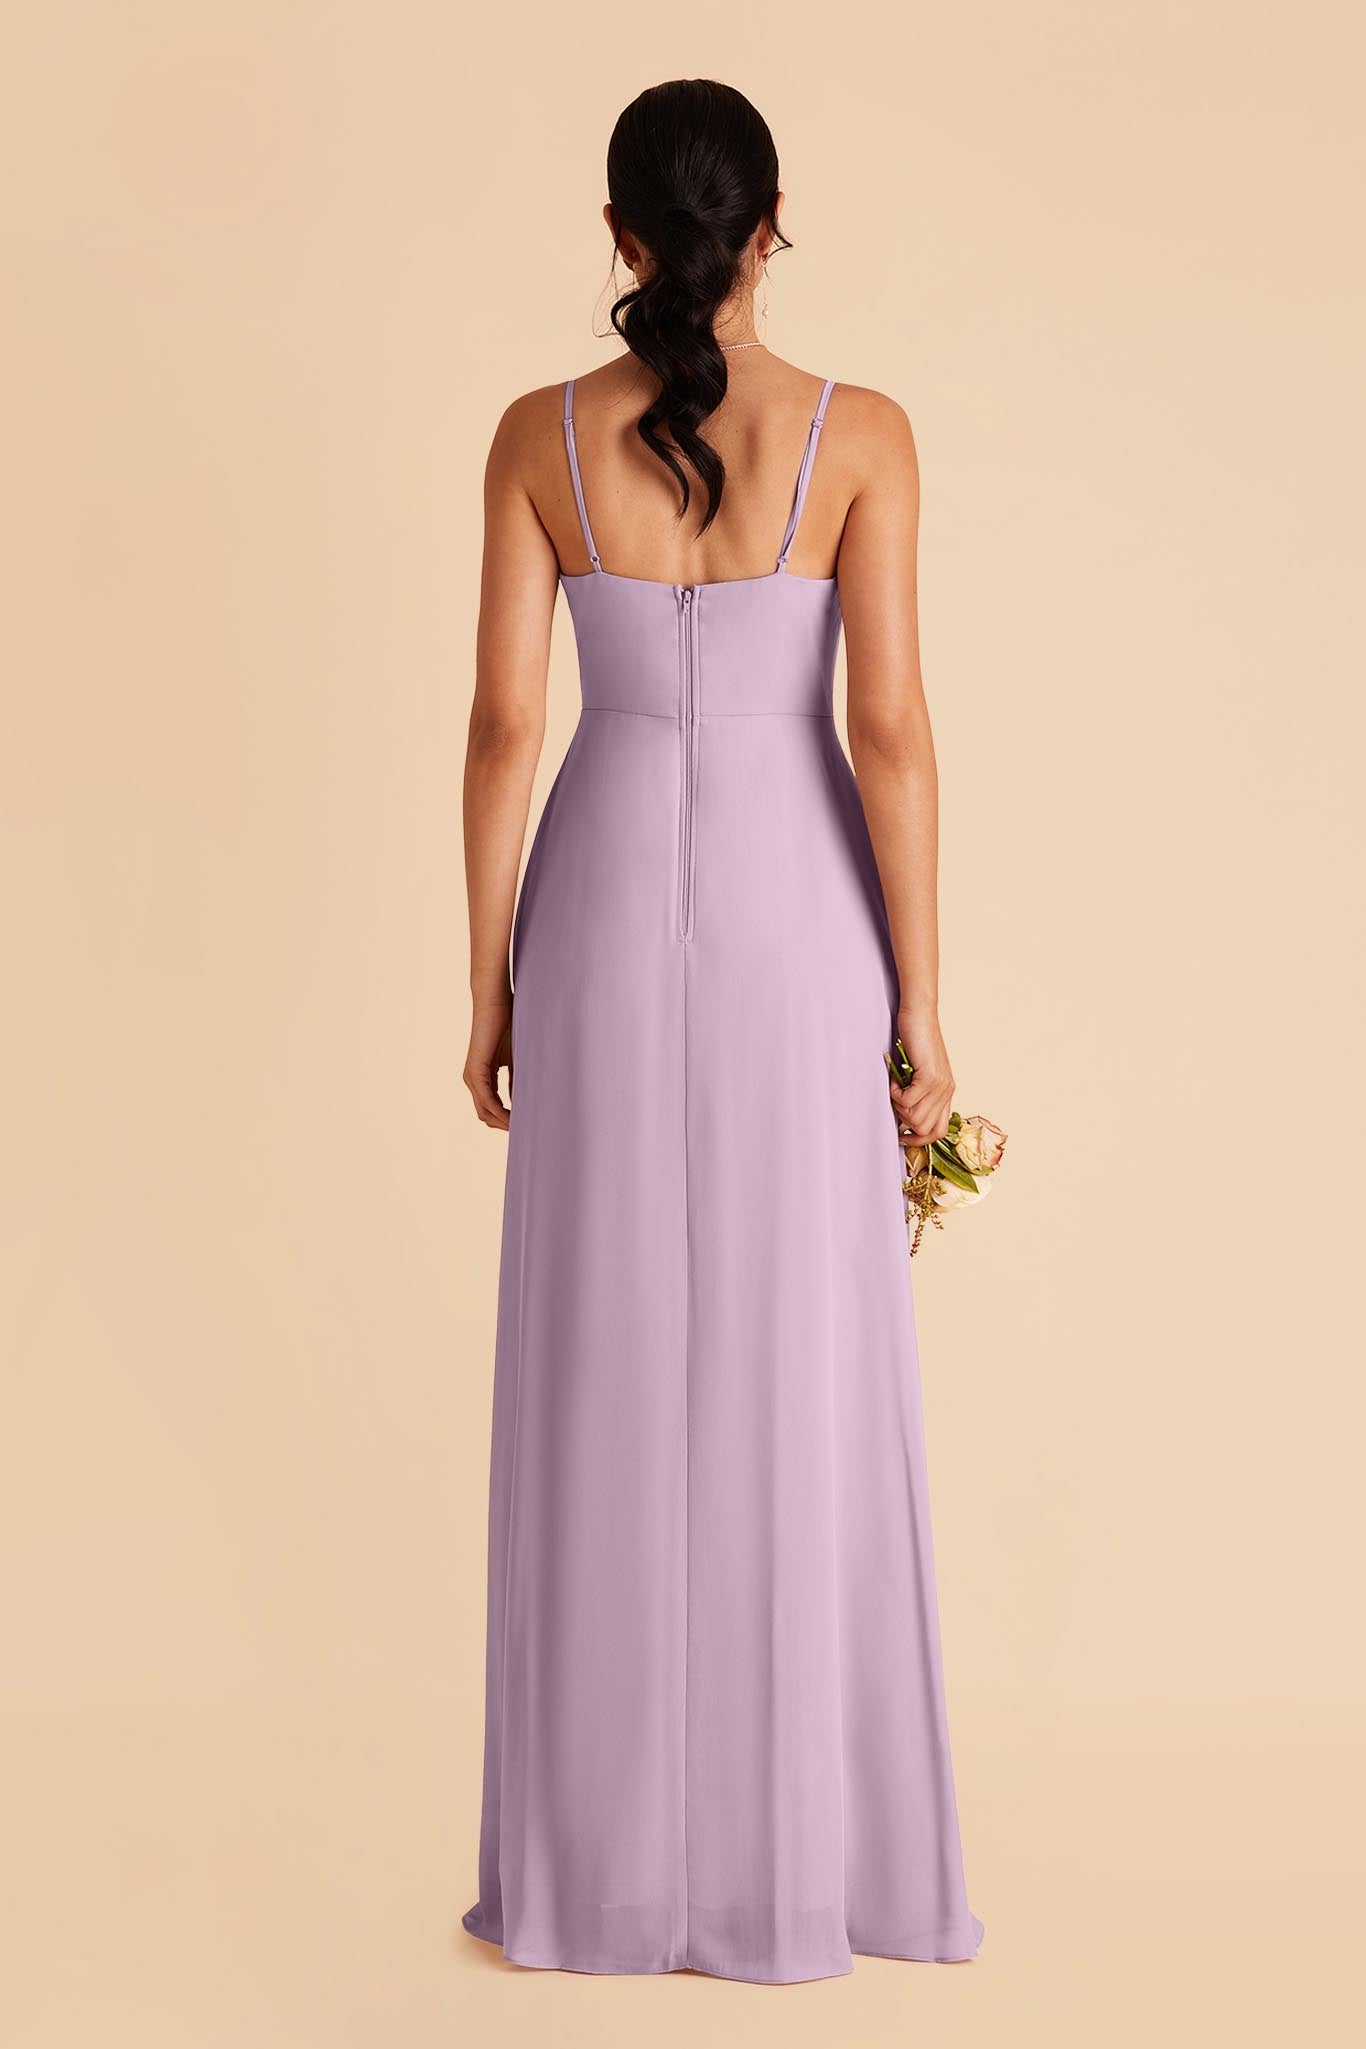 Lavender Amy Chiffon Dress by Birdy Grey